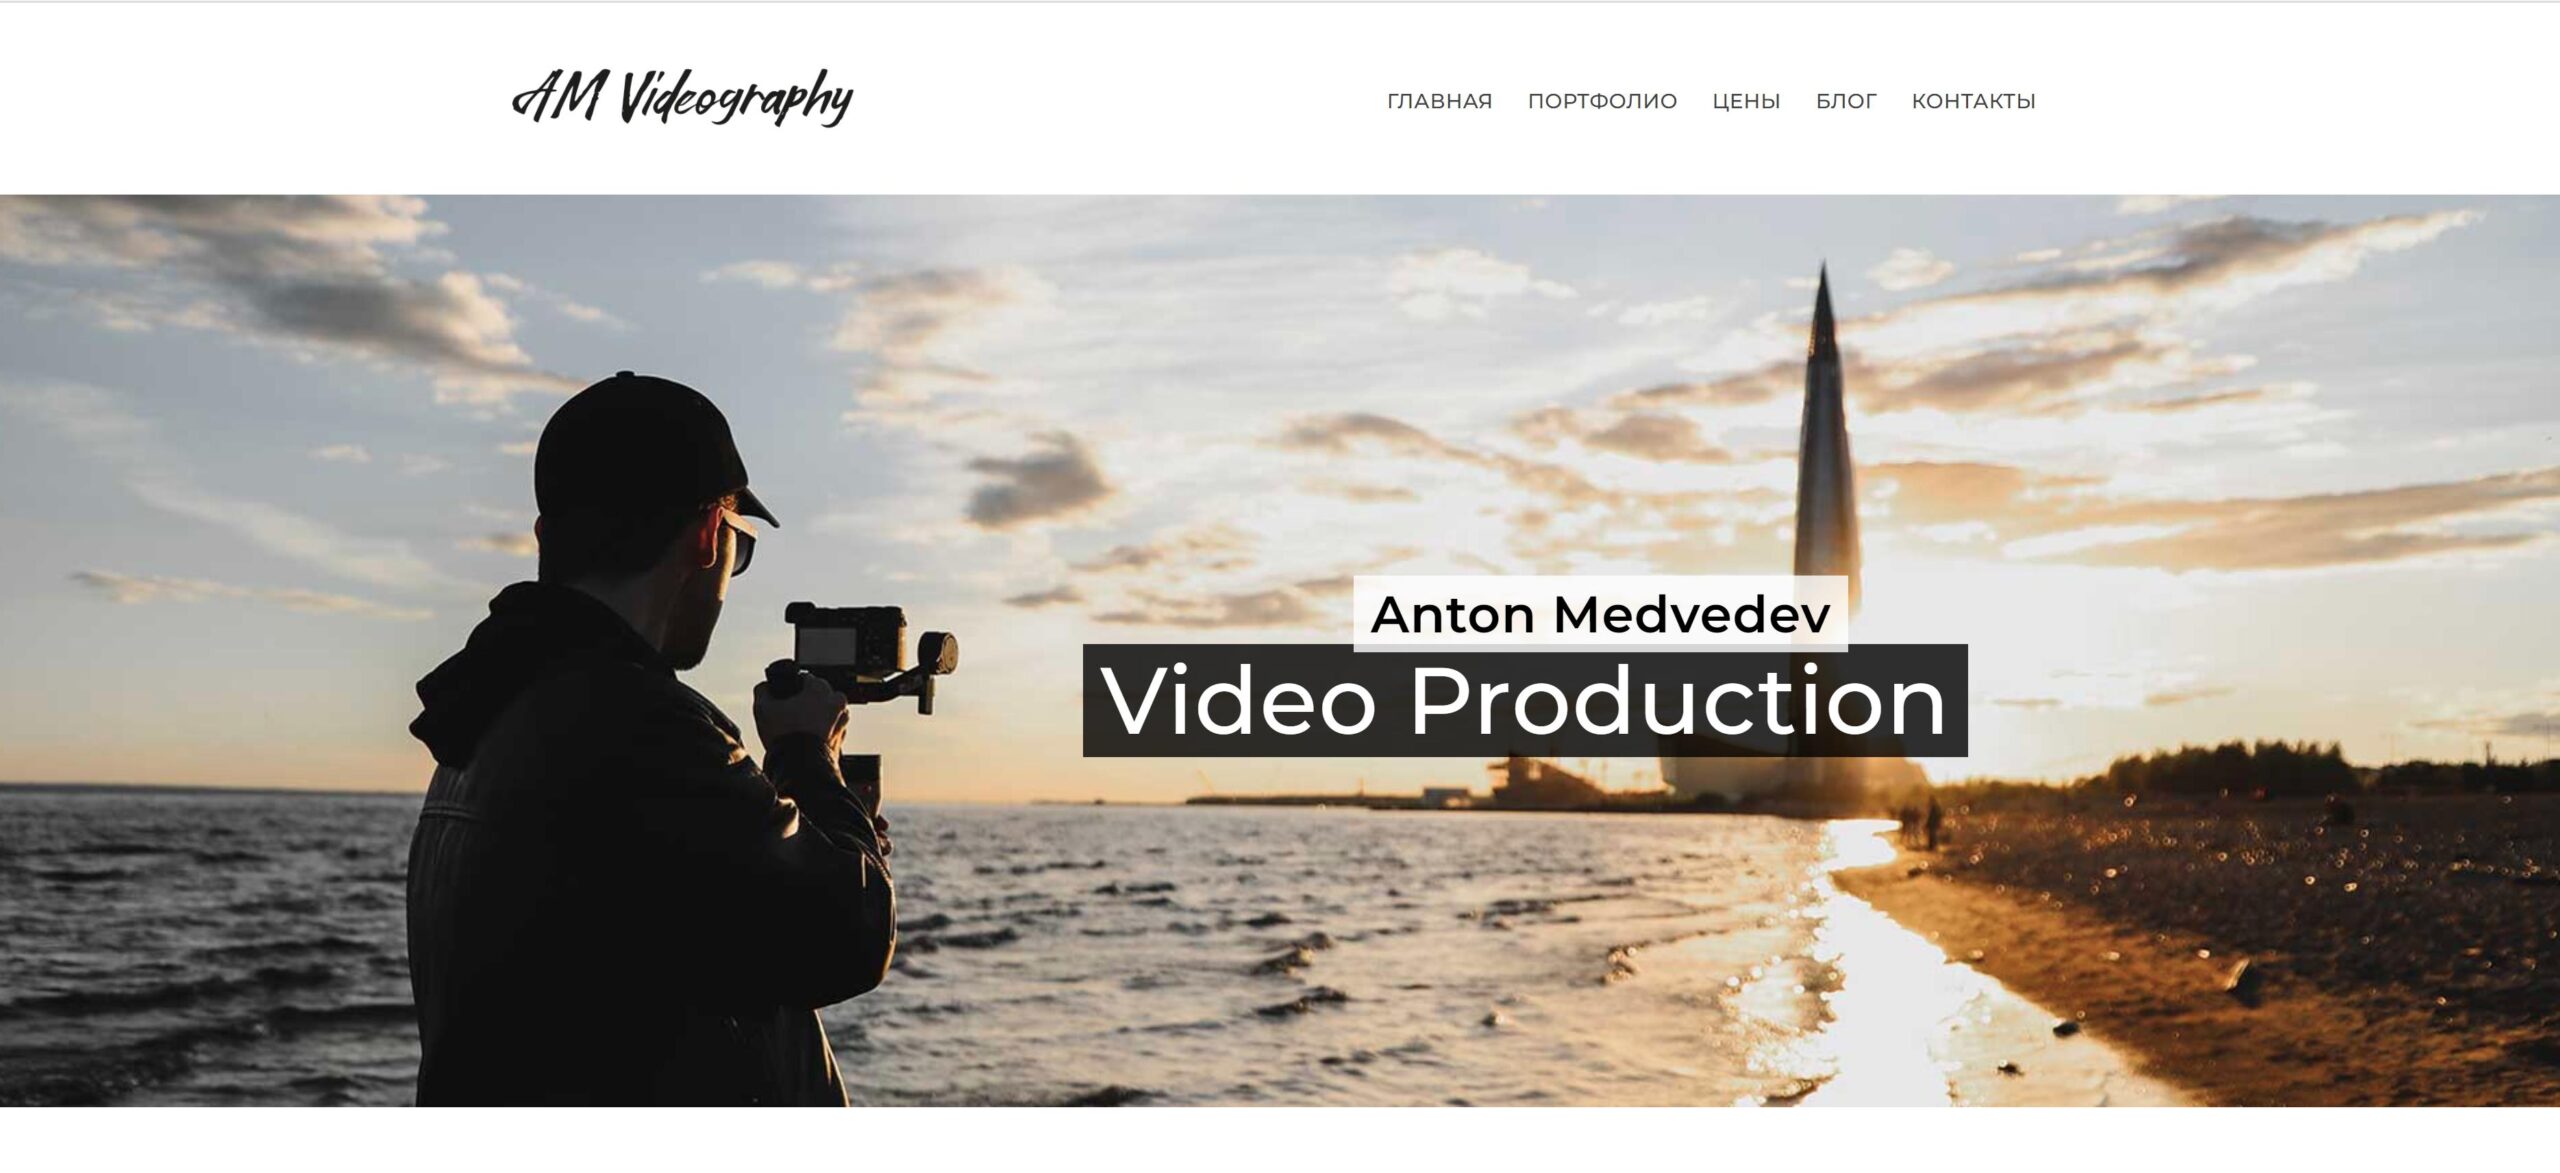 AM Videography Website